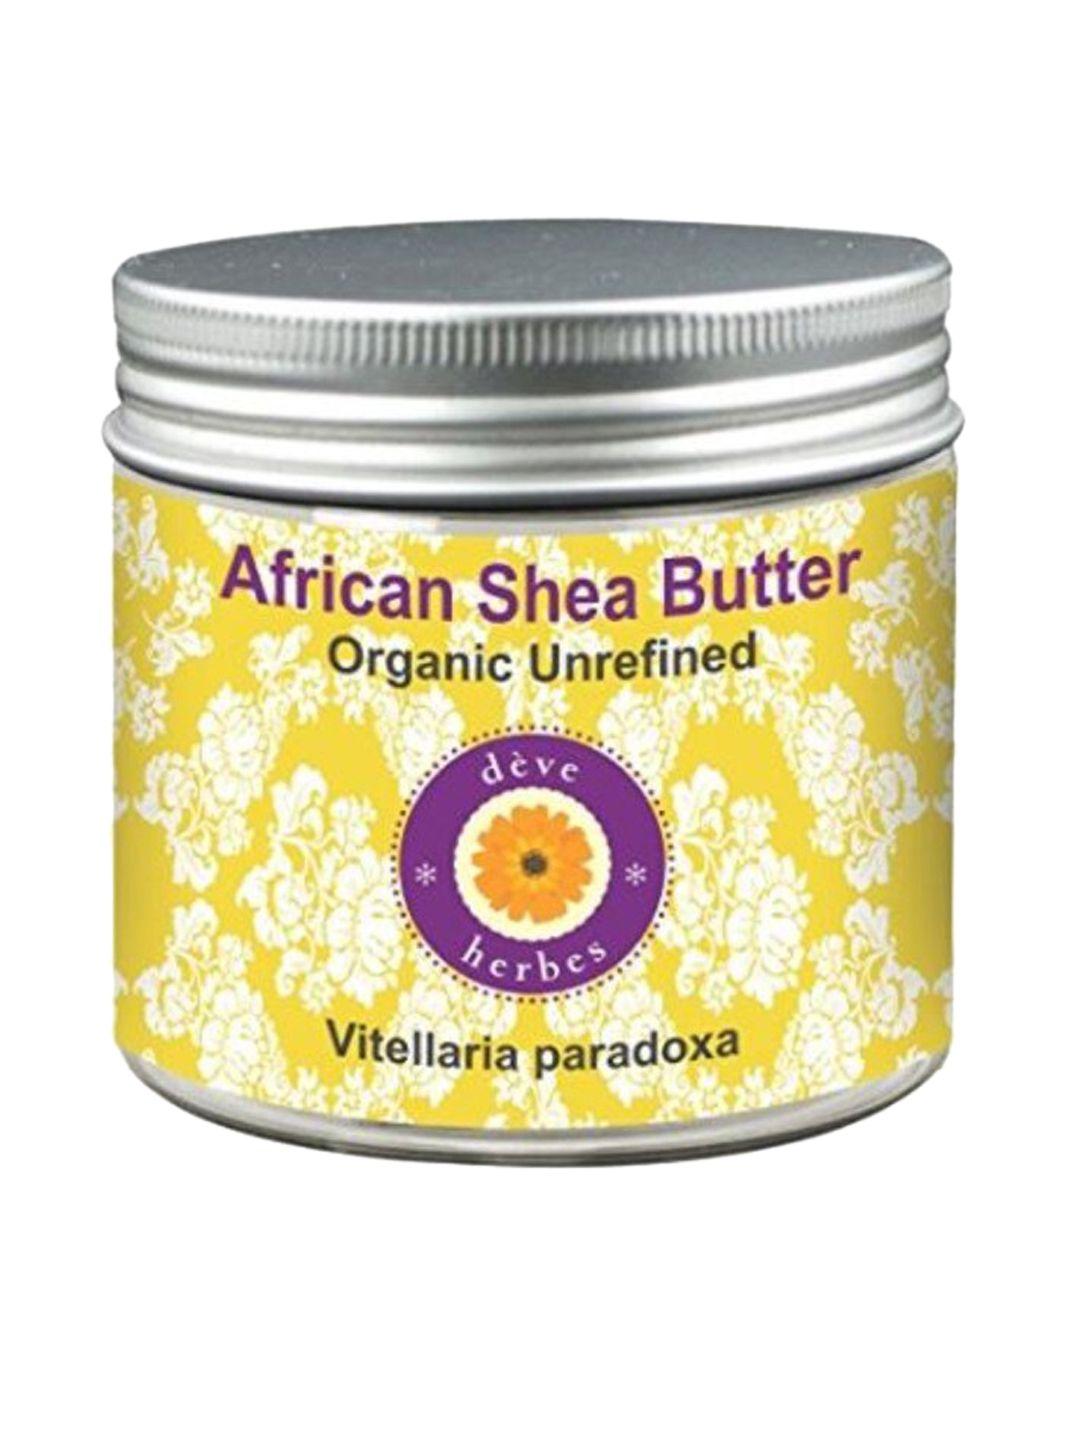 deve herbes organic unrefined african shea body butter - 50g